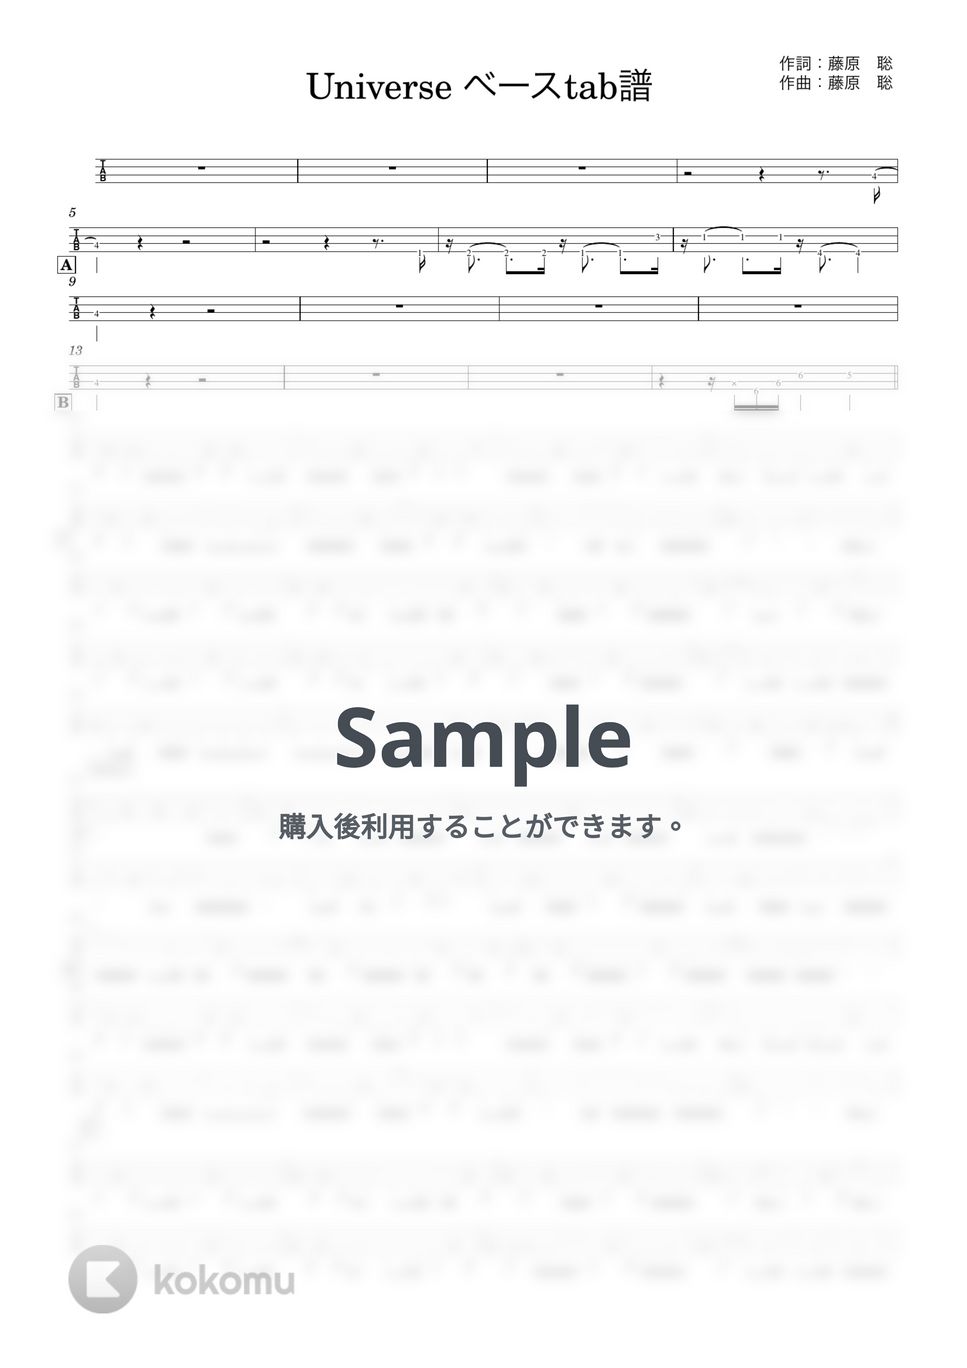 Official髭男dism - Universe (『ベースTAB譜』4弦ベース対応) by 箱譜屋